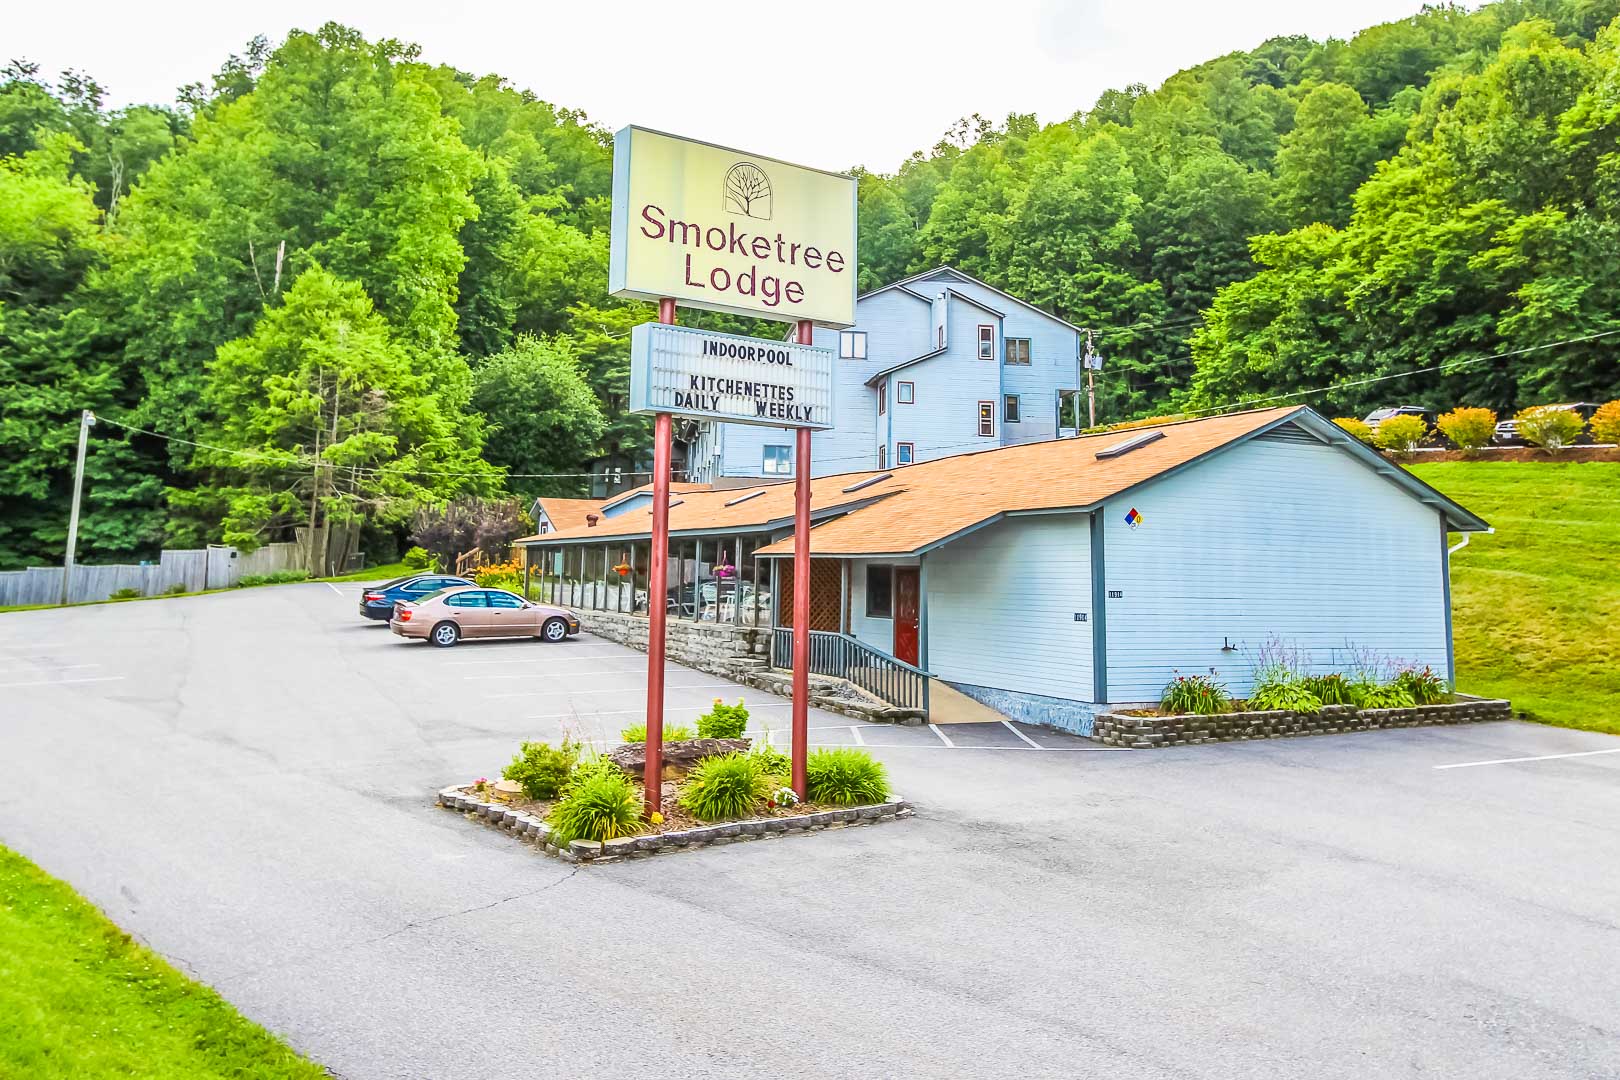 Outside view of VRI's Smoketree Lodge in North Carolina.